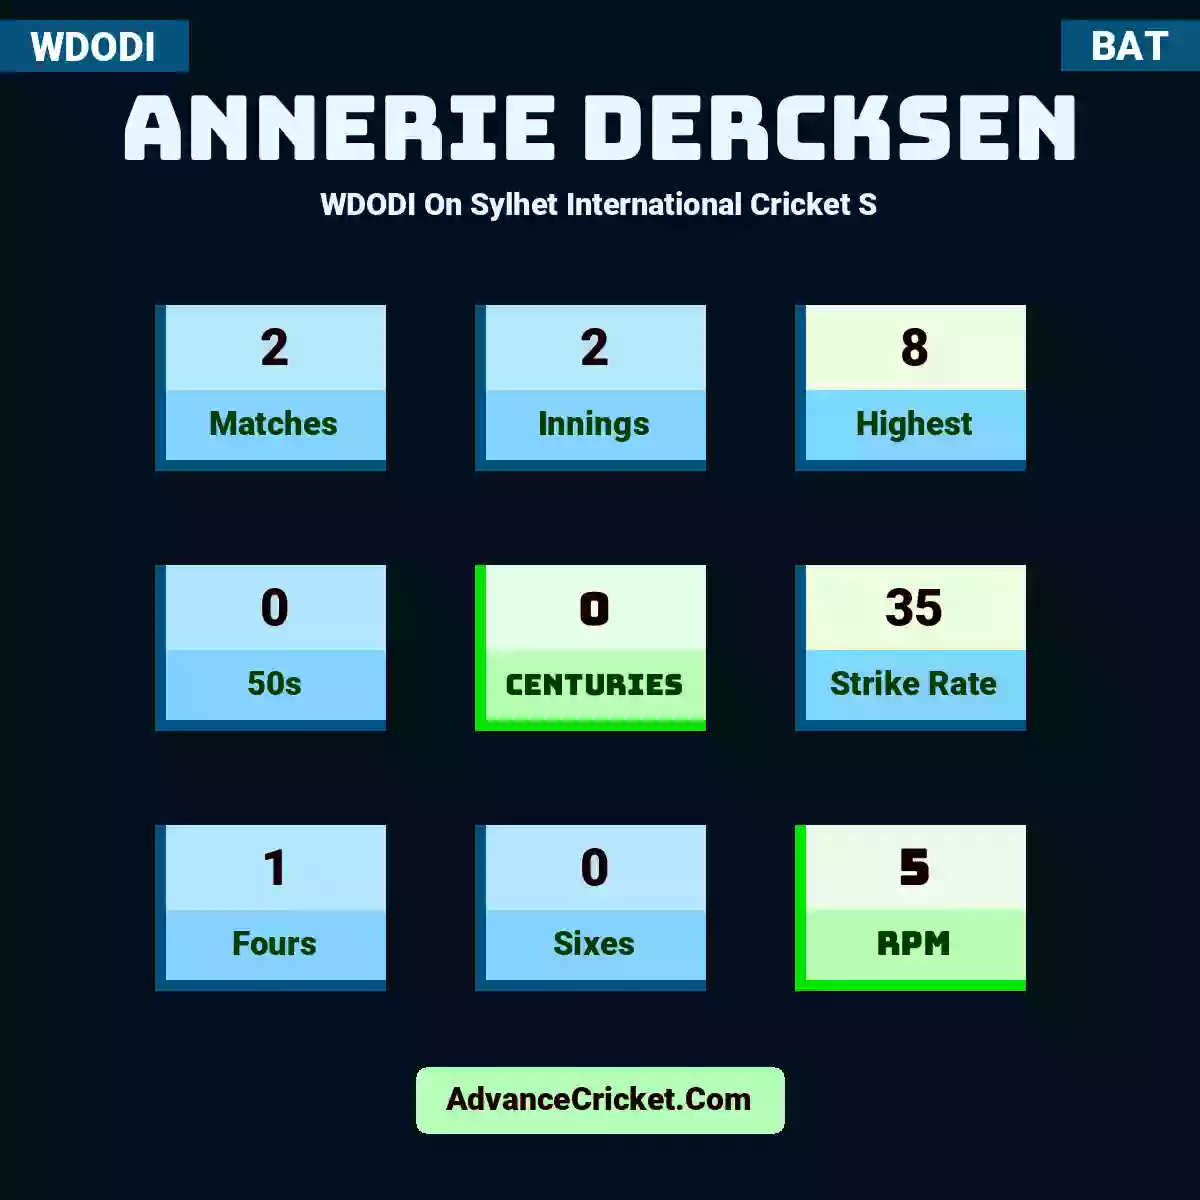 Annerie Dercksen WDODI  On Sylhet International Cricket S, Annerie Dercksen played 2 matches, scored 8 runs as highest, 0 half-centuries, and 0 centuries, with a strike rate of 35. A.Dercksen hit 1 fours and 0 sixes, with an RPM of 5.